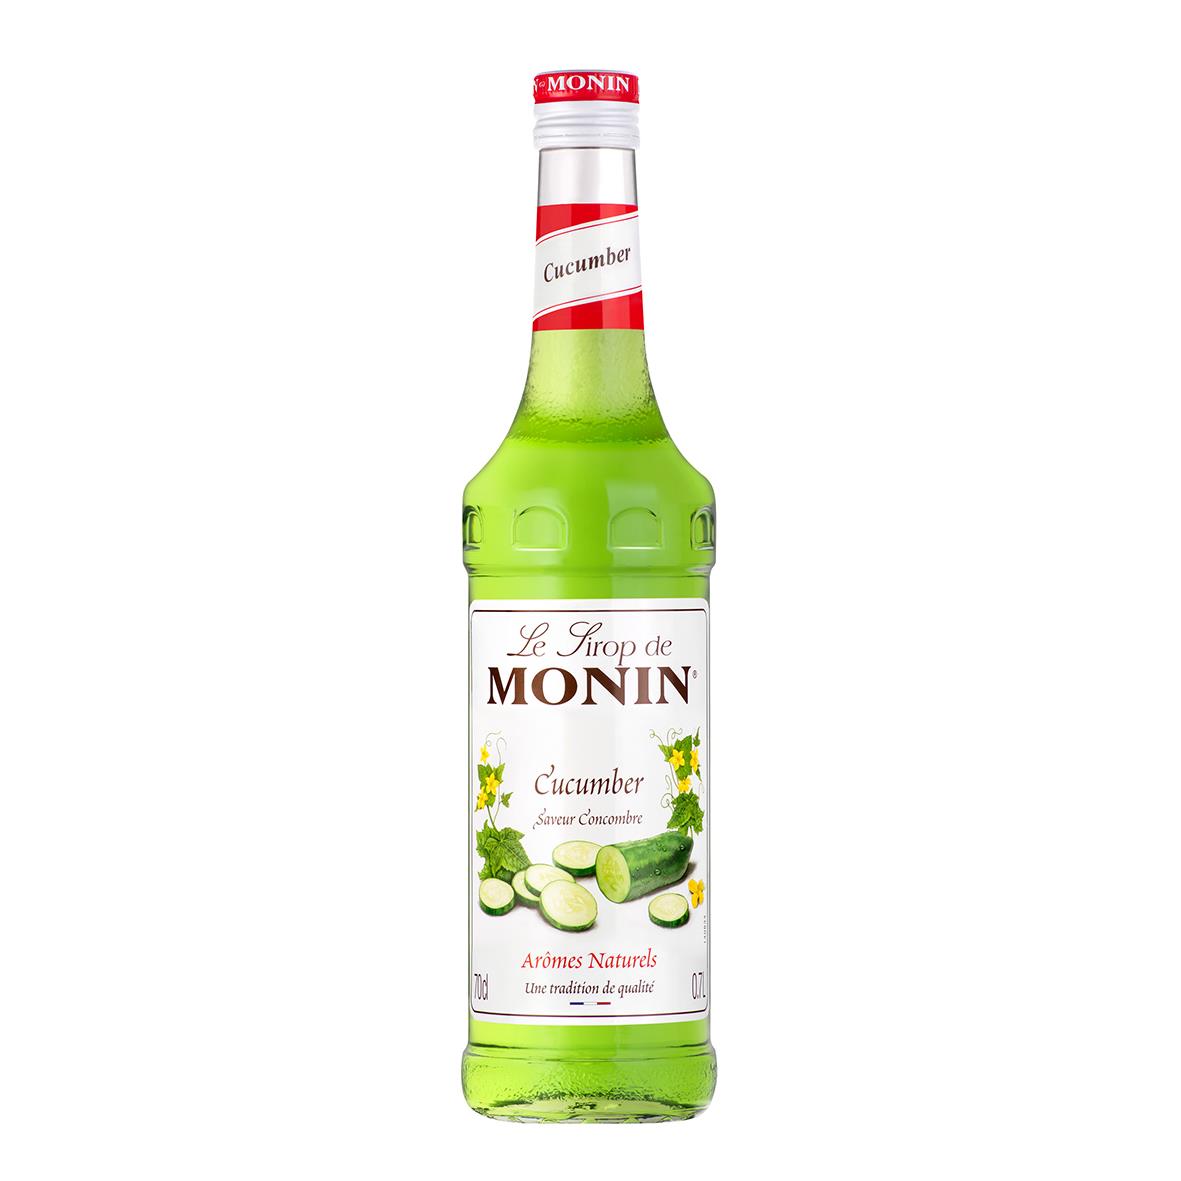 Cucumber Monin lös flaska 70cl 64700493